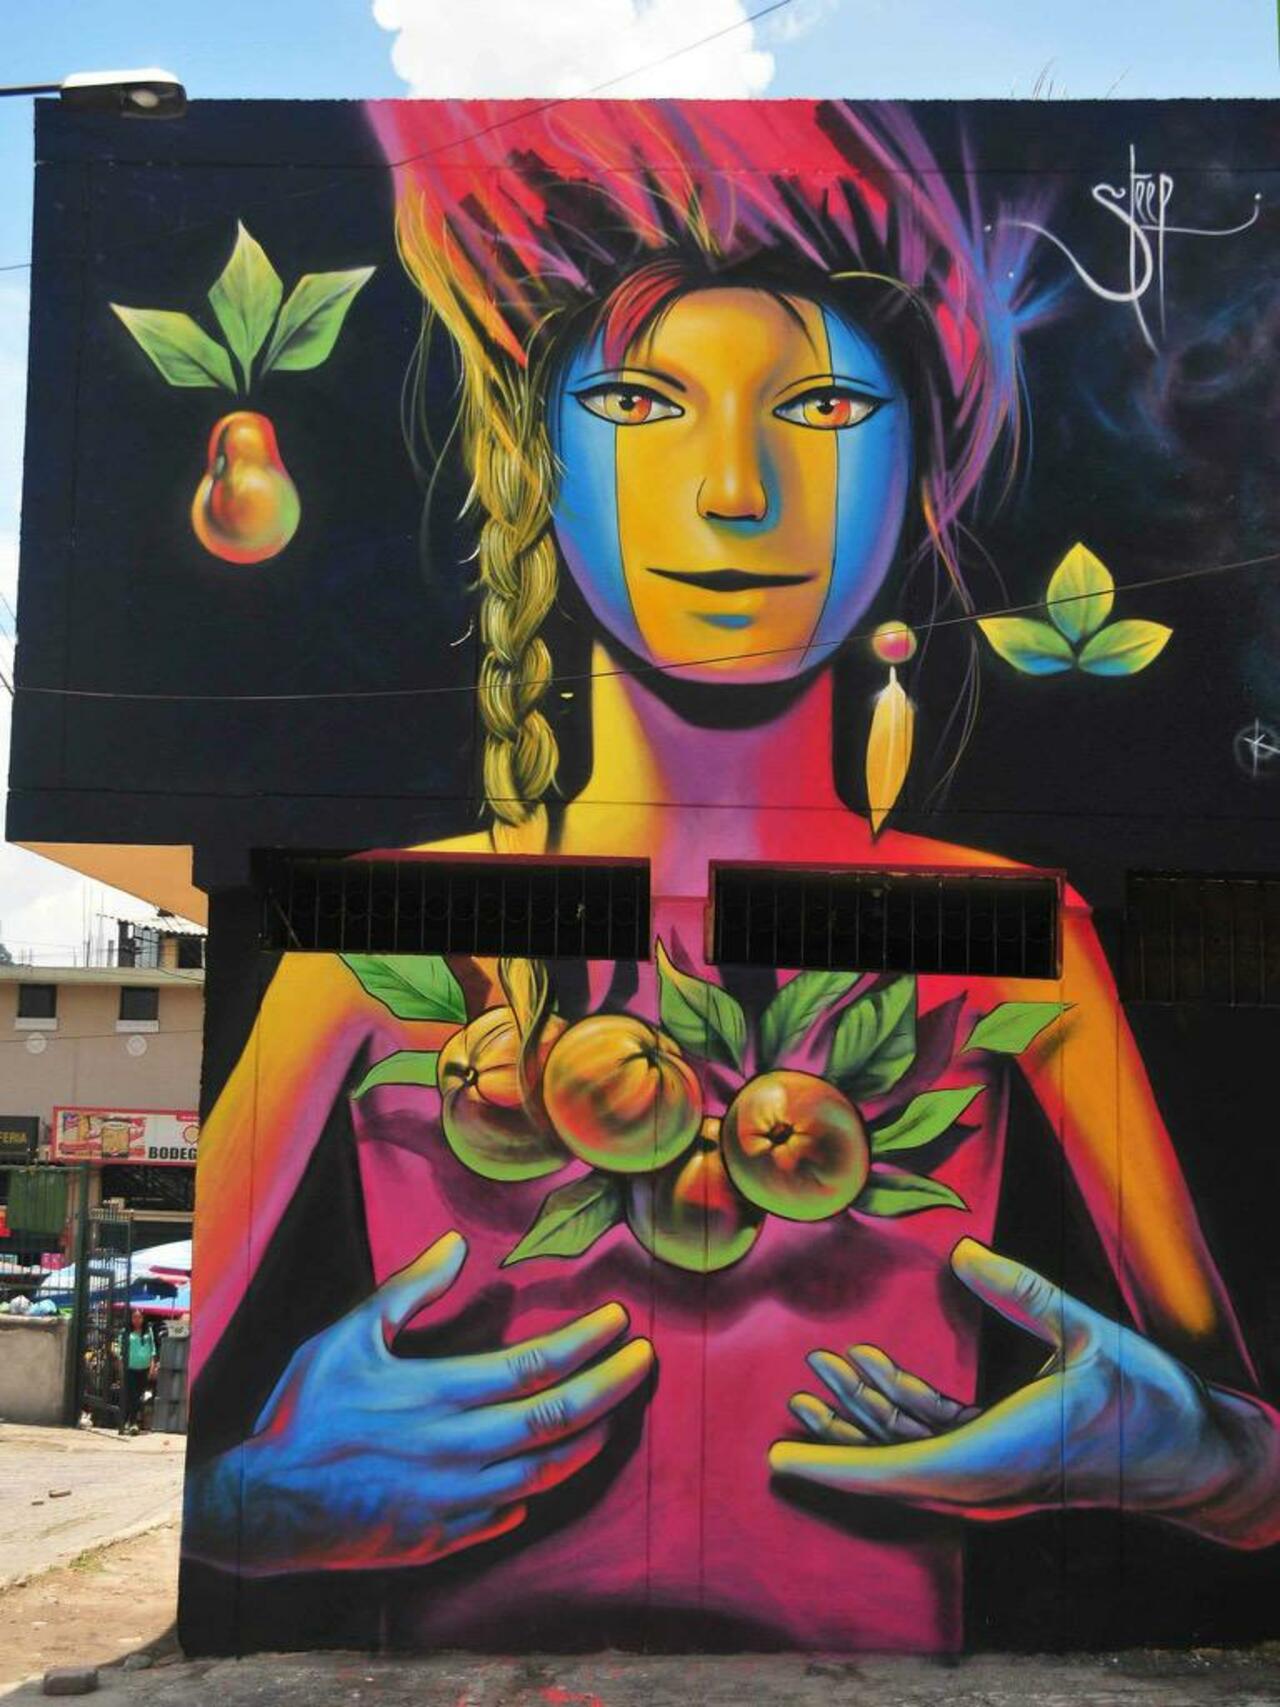 Street Art by Steep

#art #graffiti #mural #streetart http://t.co/XdDRq9m32Z